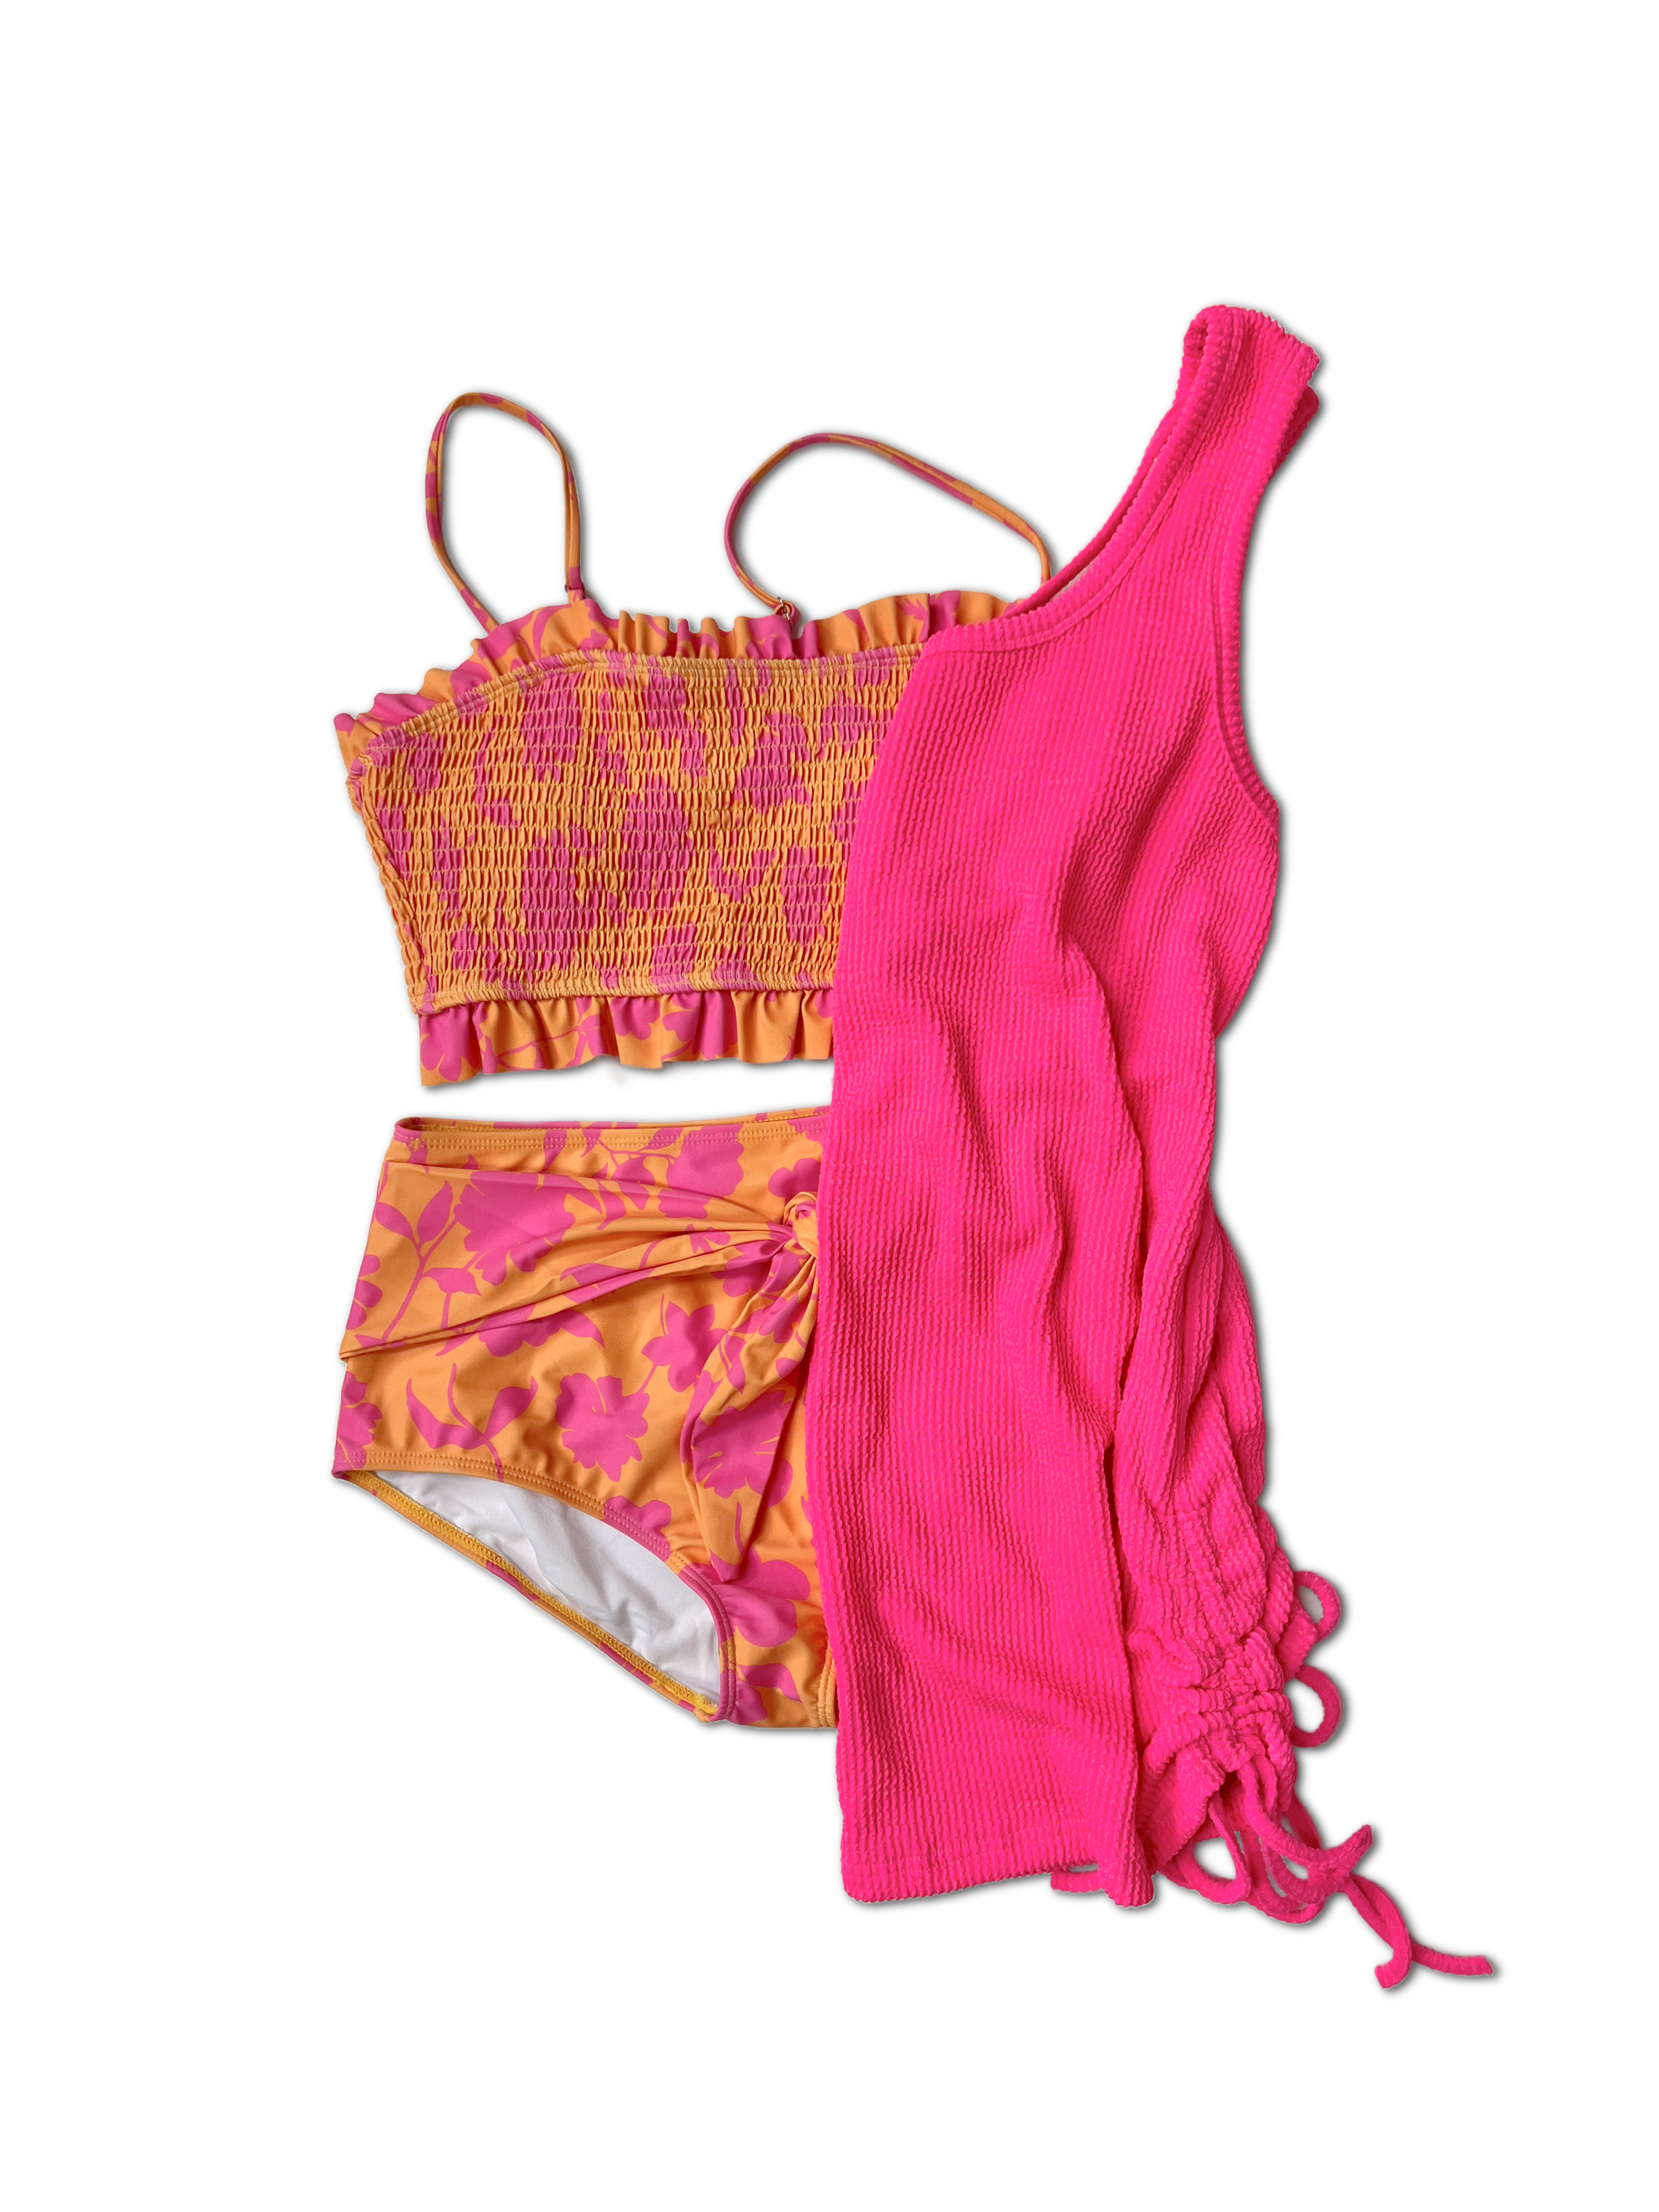 Take it Slow - Hot Pink Coverup-Boutique Simplified-Urban Threadz Boutique, Women's Fashion Boutique in Saugatuck, MI